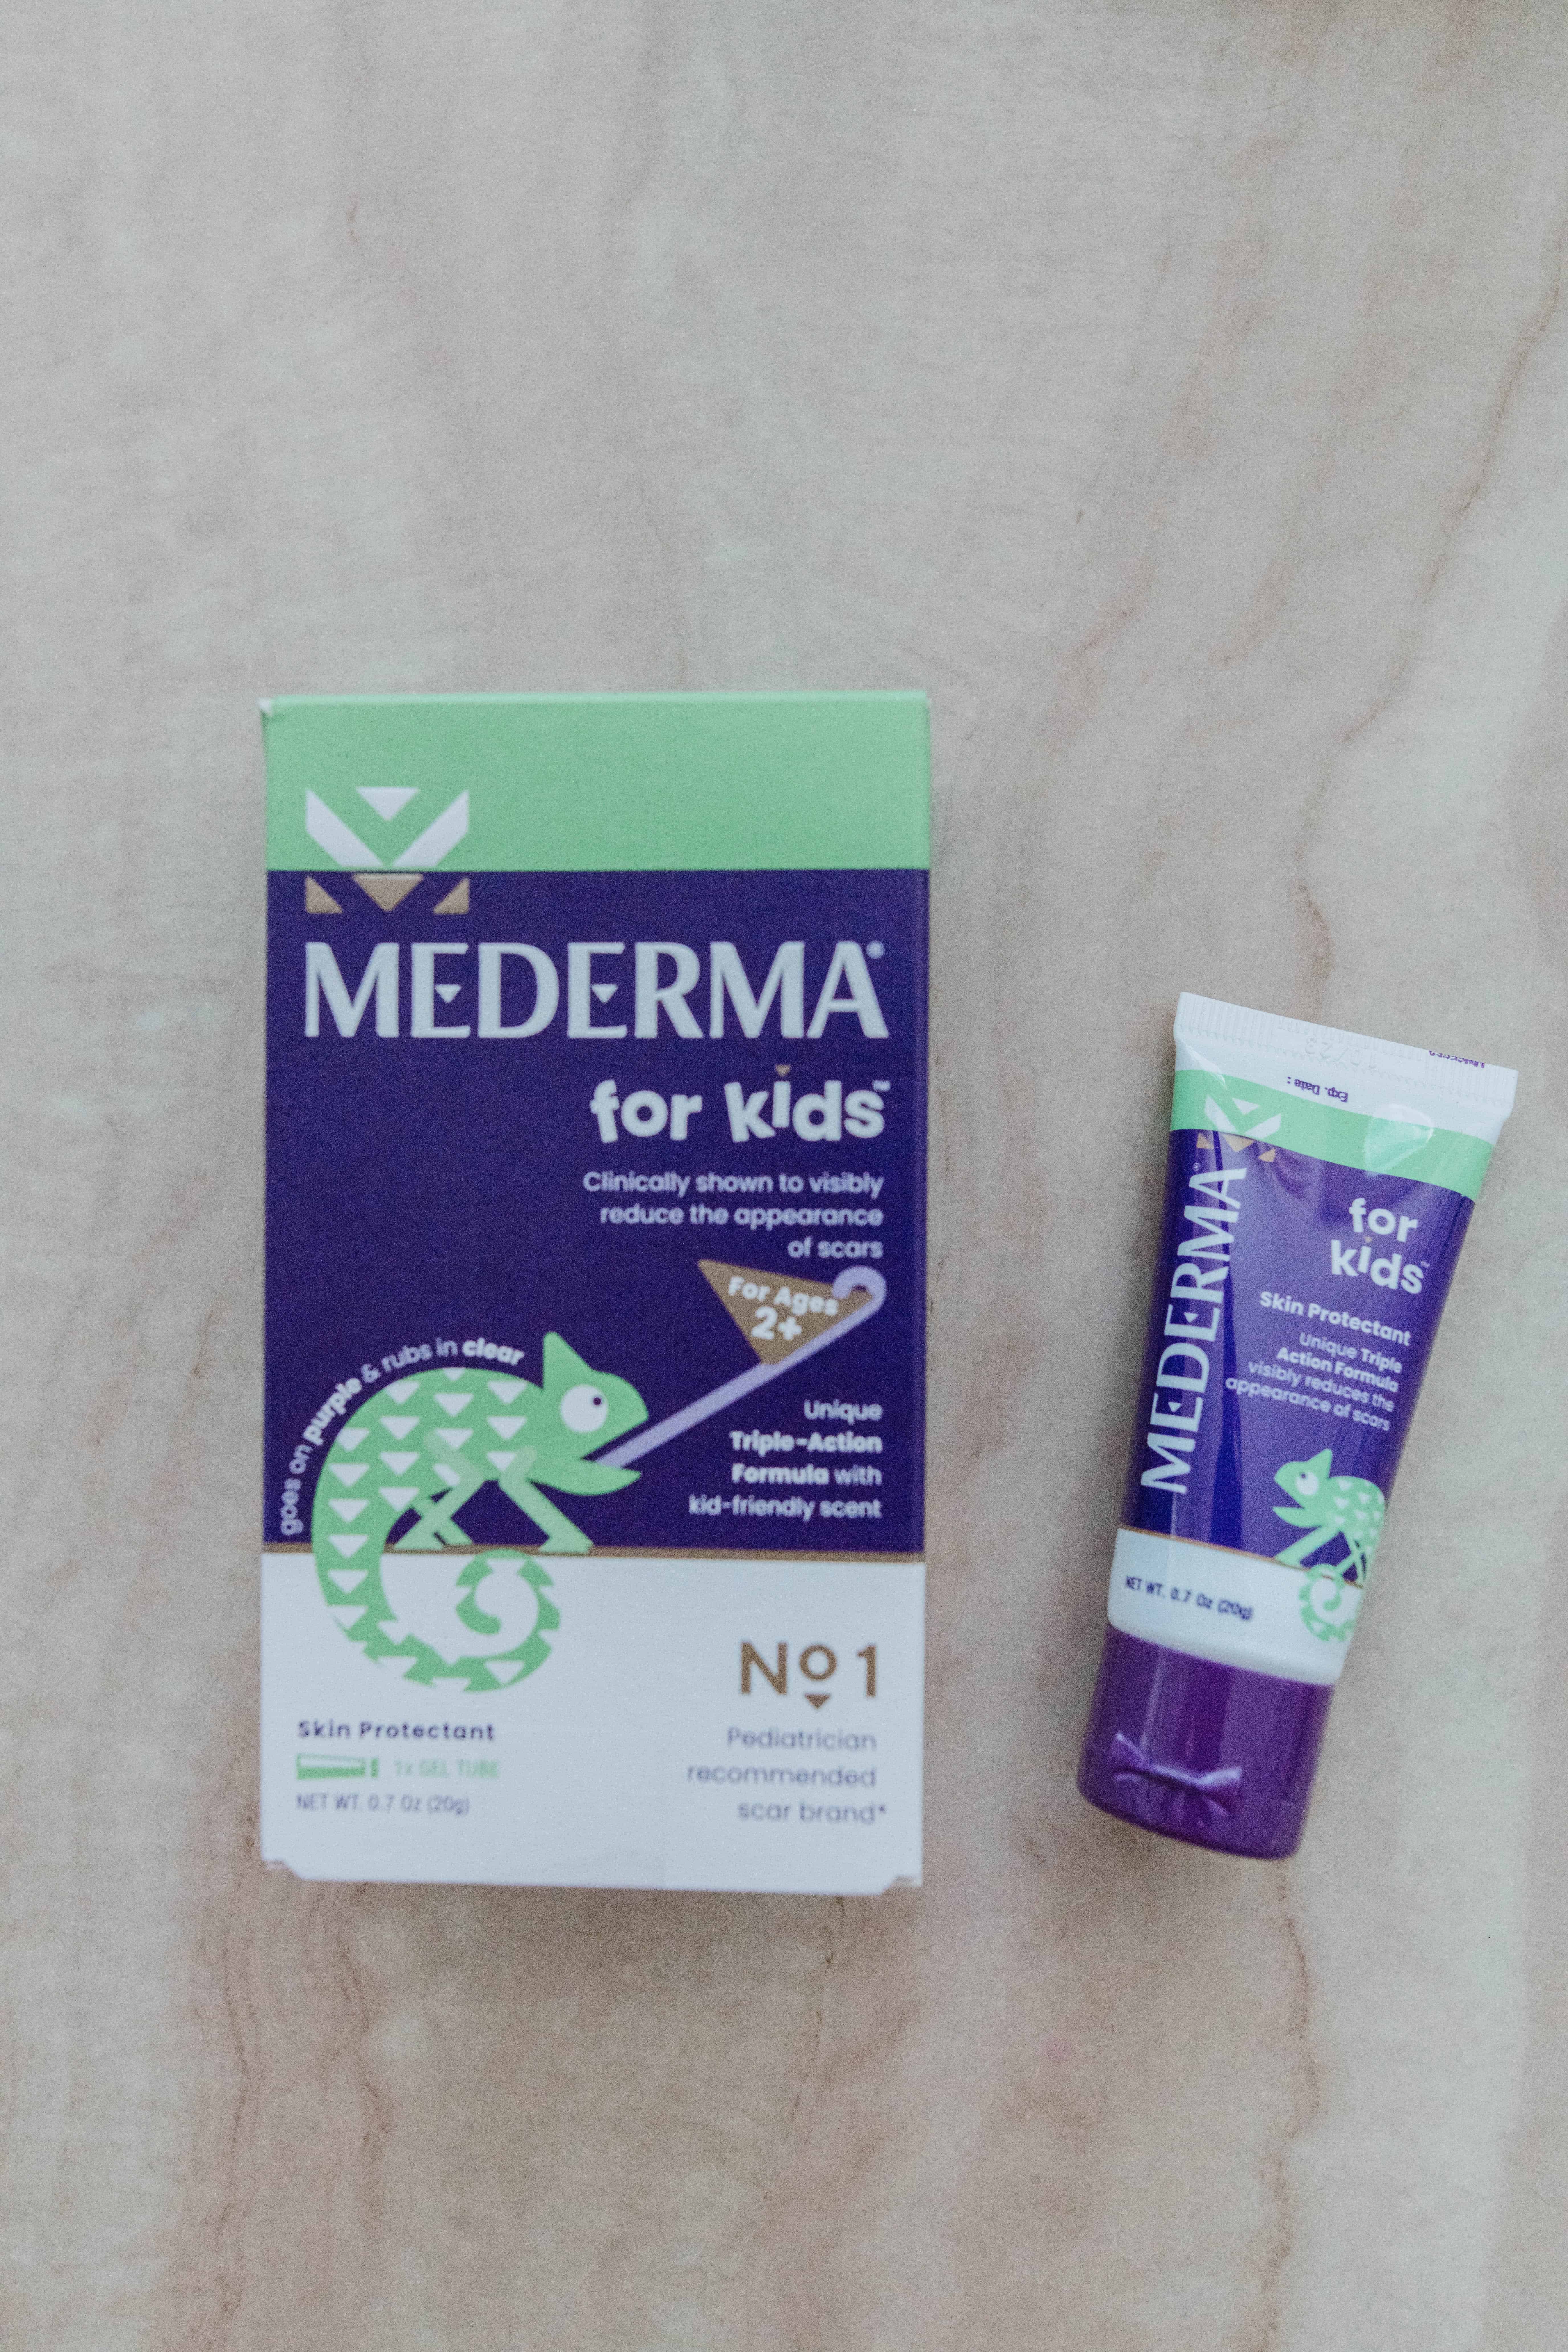 Mederma scar cream for kids